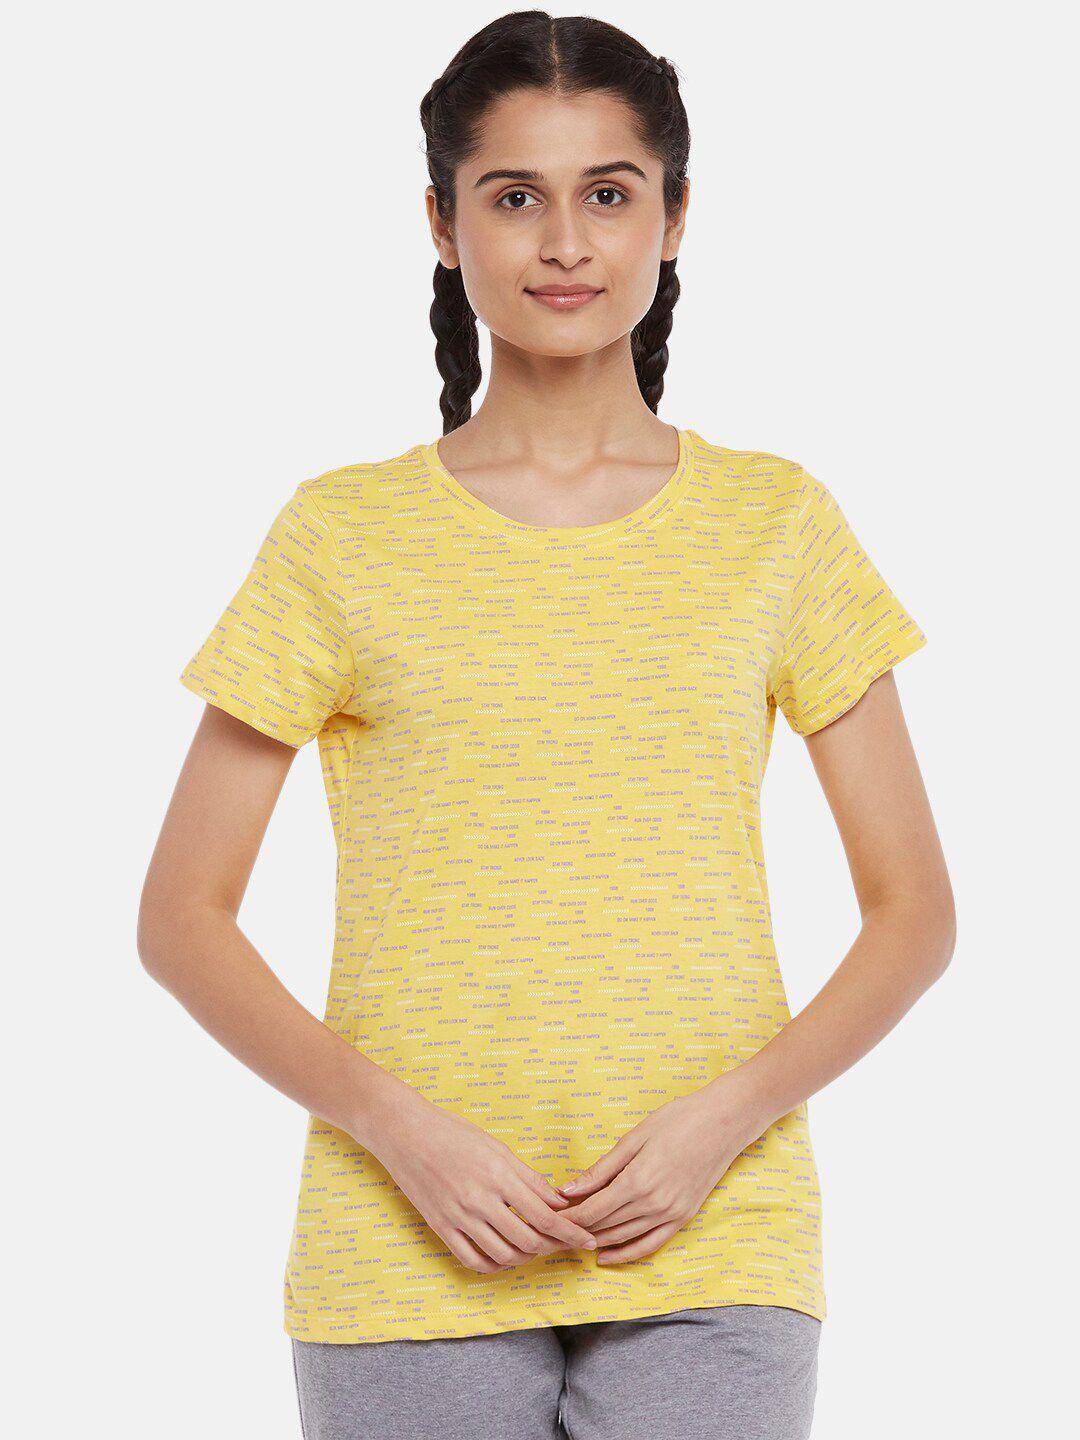 ajile-by-pantaloons-women-yellow-printed-tshirt